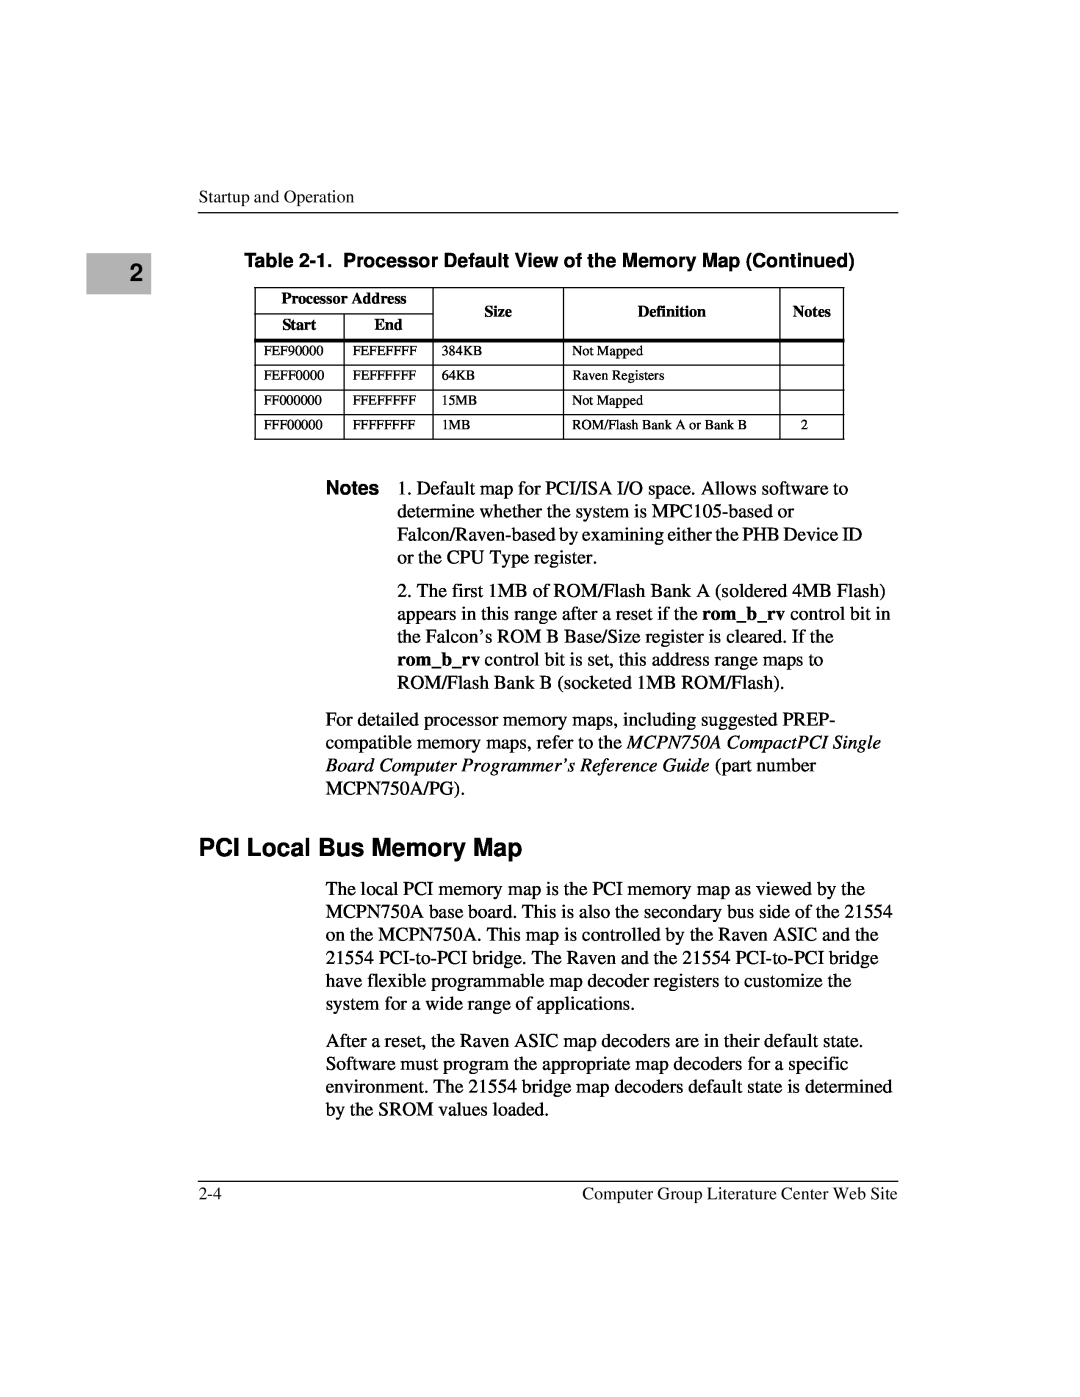 Motorola MCPN750A, IH5 manual PCI Local Bus Memory Map, 1. Processor Default View of the Memory Map Continued 